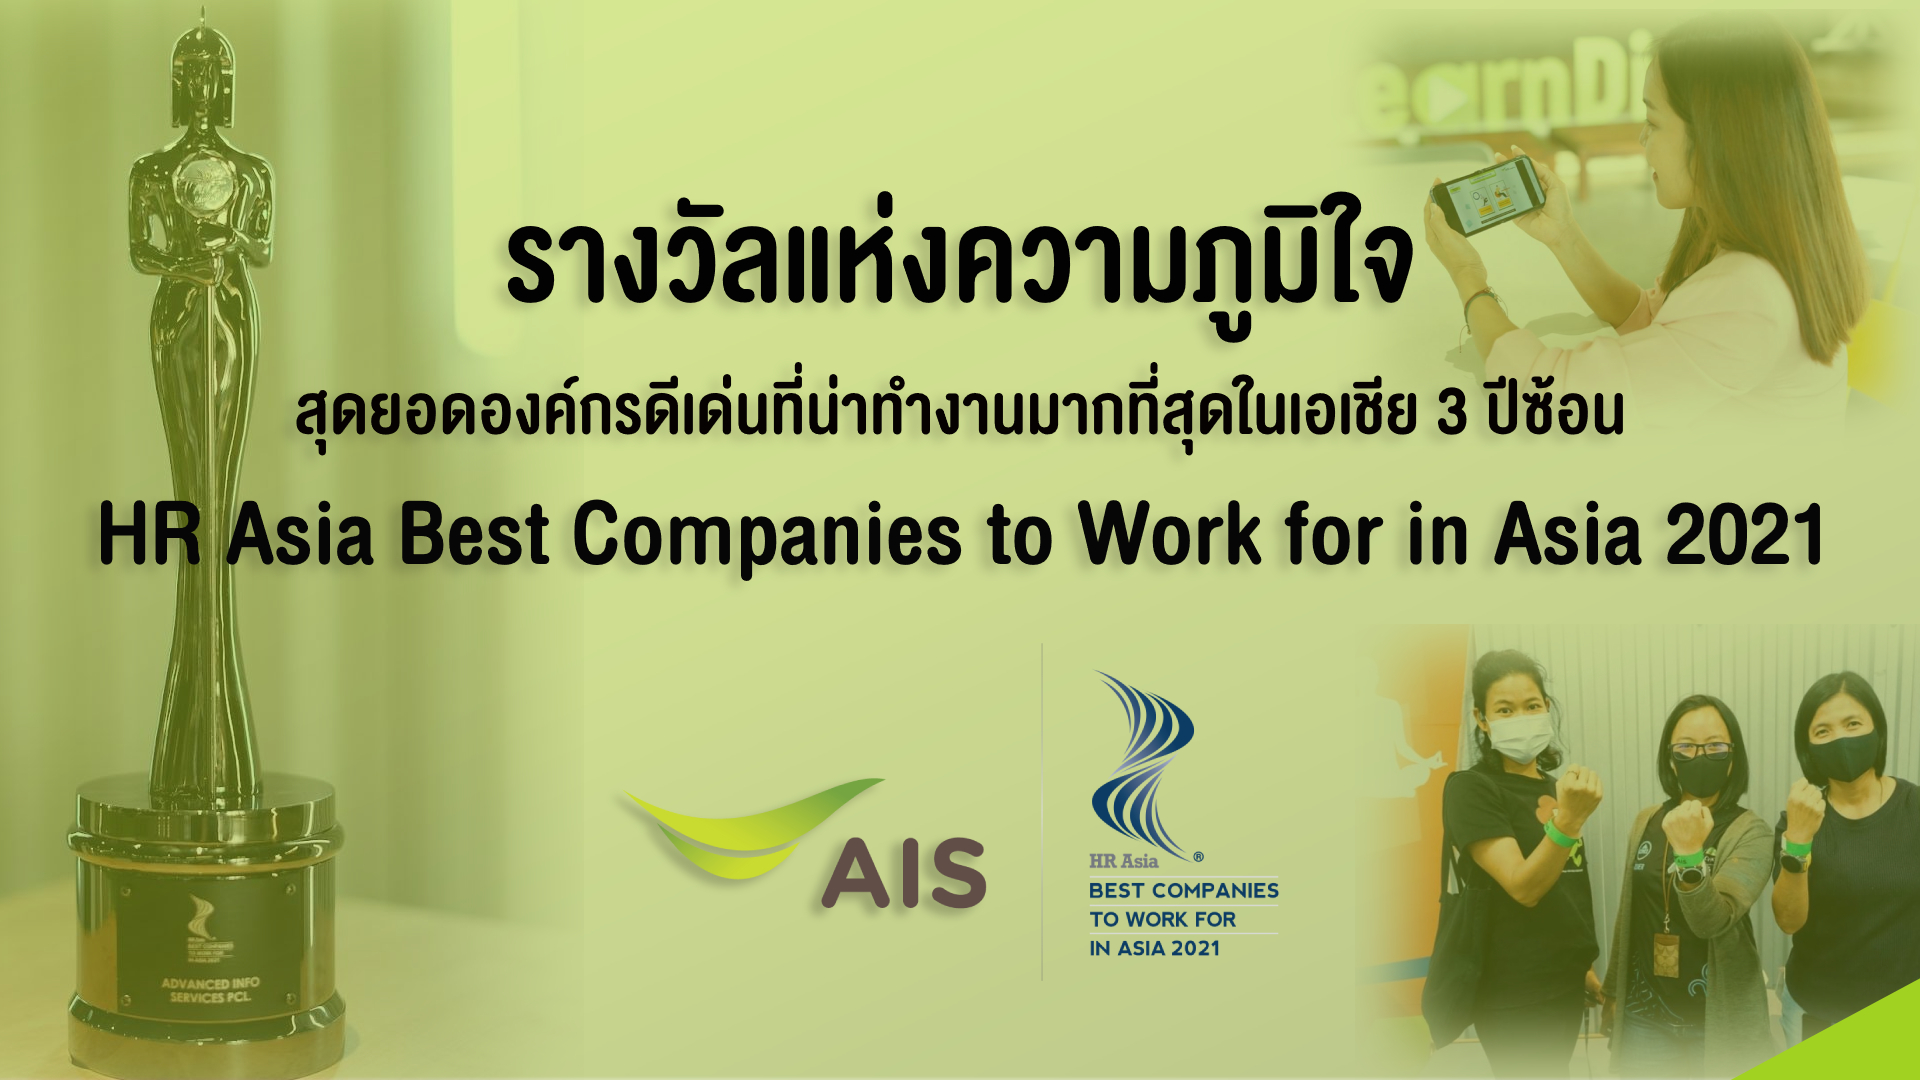 AIS คว้ารางวัลสุดยอดองค์กรดีเด่นที่น่าทำงานมากที่สุดในเอเชีย 3 ปีซ้อน   HR Asia Best Companies to Work for in Asia 2021  สะท้อนความสำเร็จด้านการ “พัฒนาบุคลากร” ผ่านความแข็งแกร่งด้านดิจิทัลเทคโนโลยี